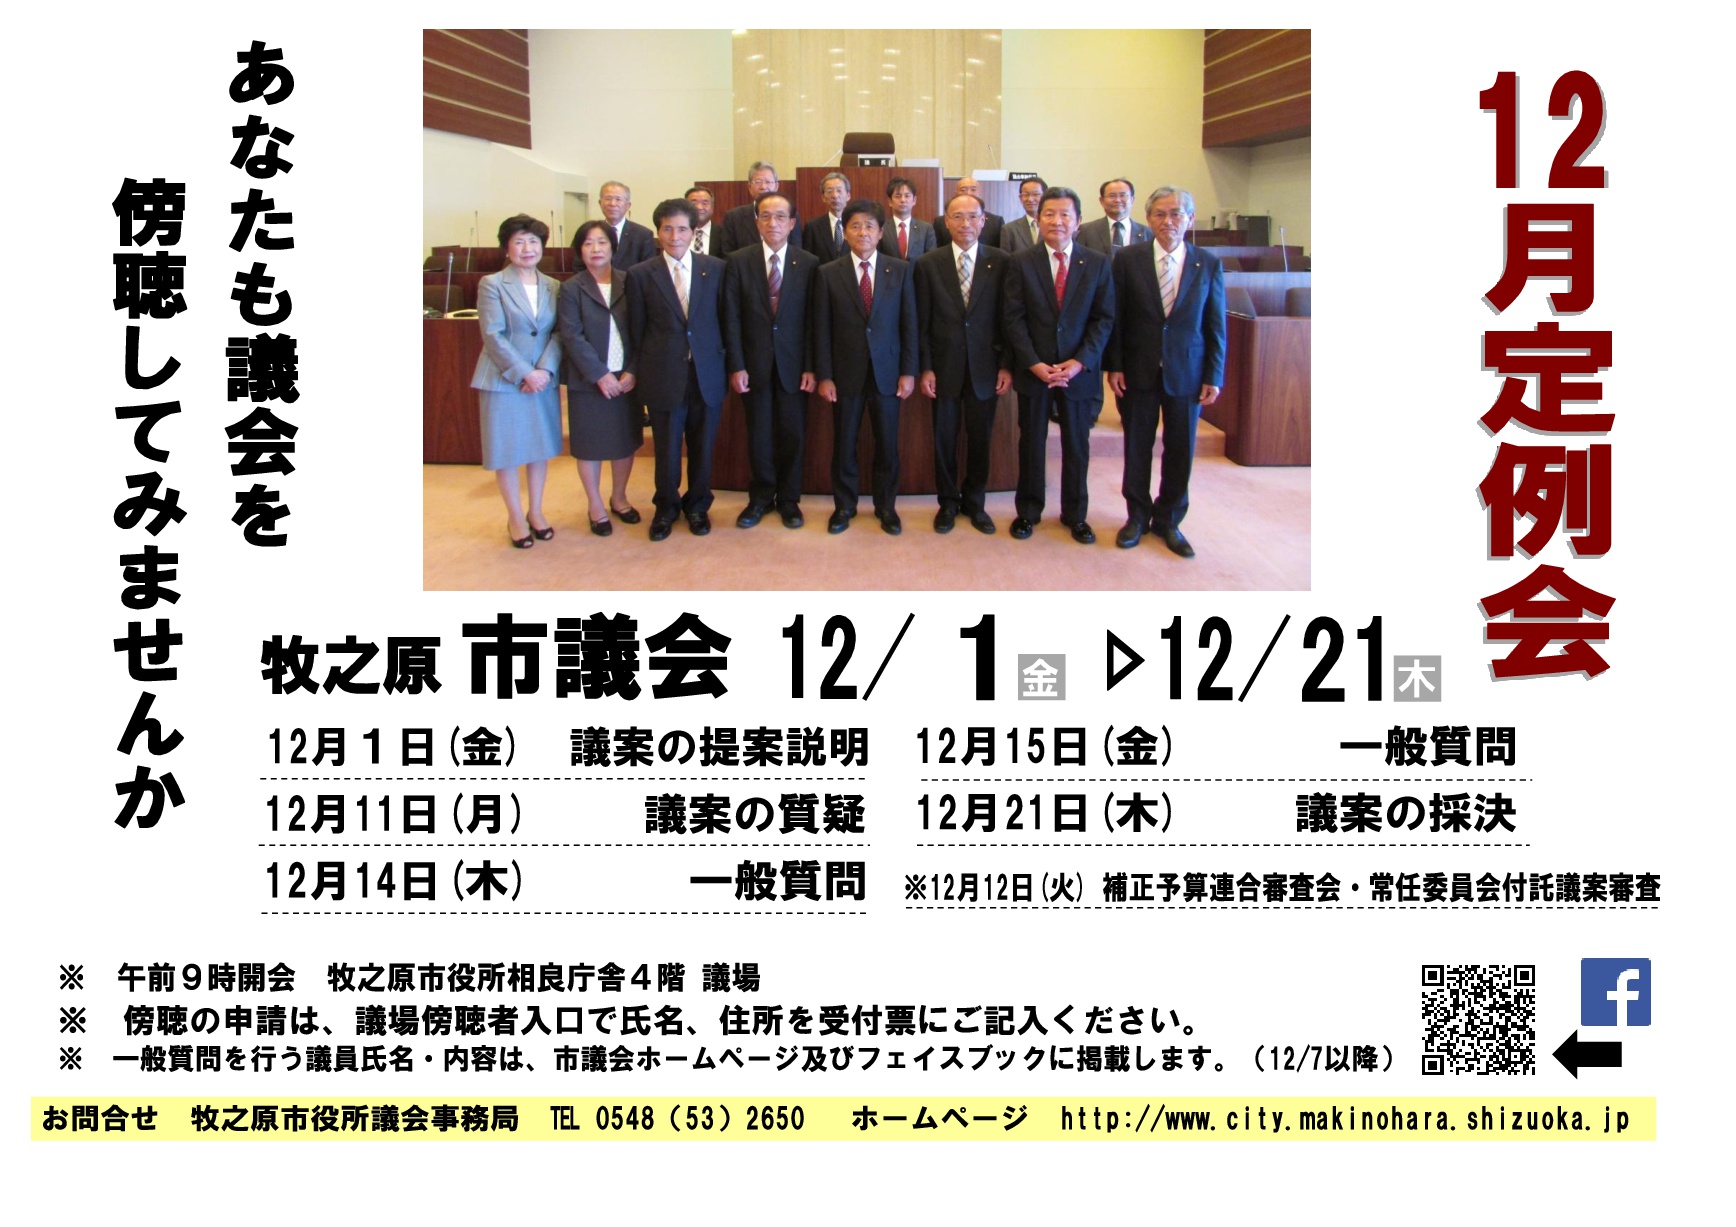 平成29年第6回市議会12月定例会の日程の画像